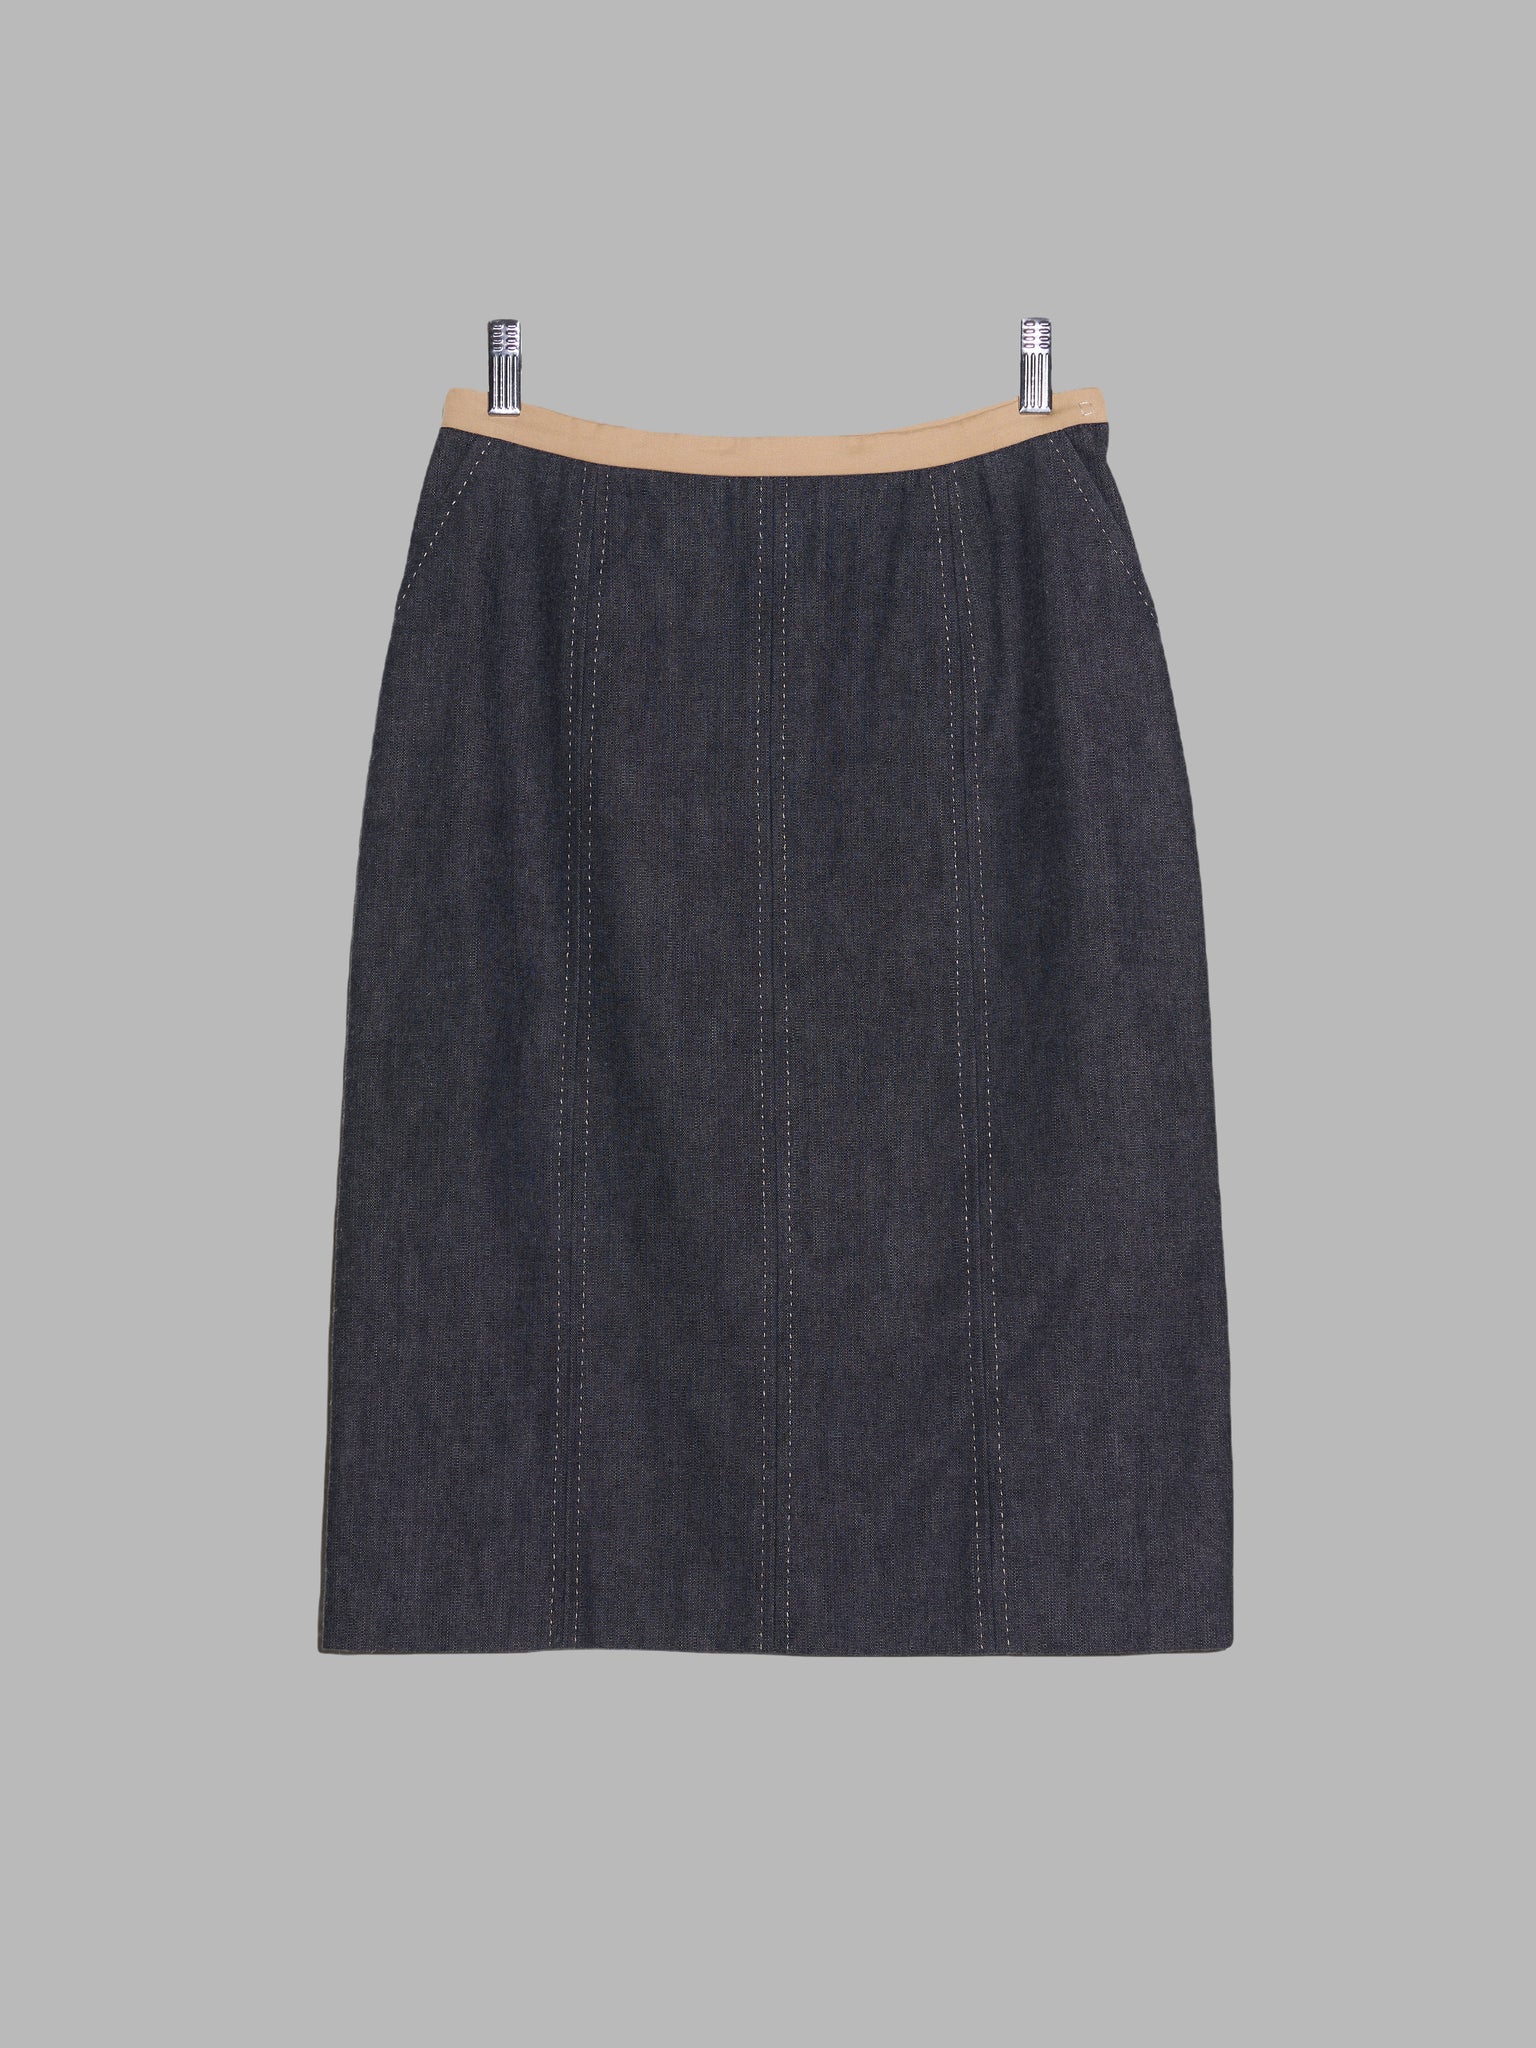 Alessandro dell'Acqua grey denim contrast waistband pencil skirt - IT 40